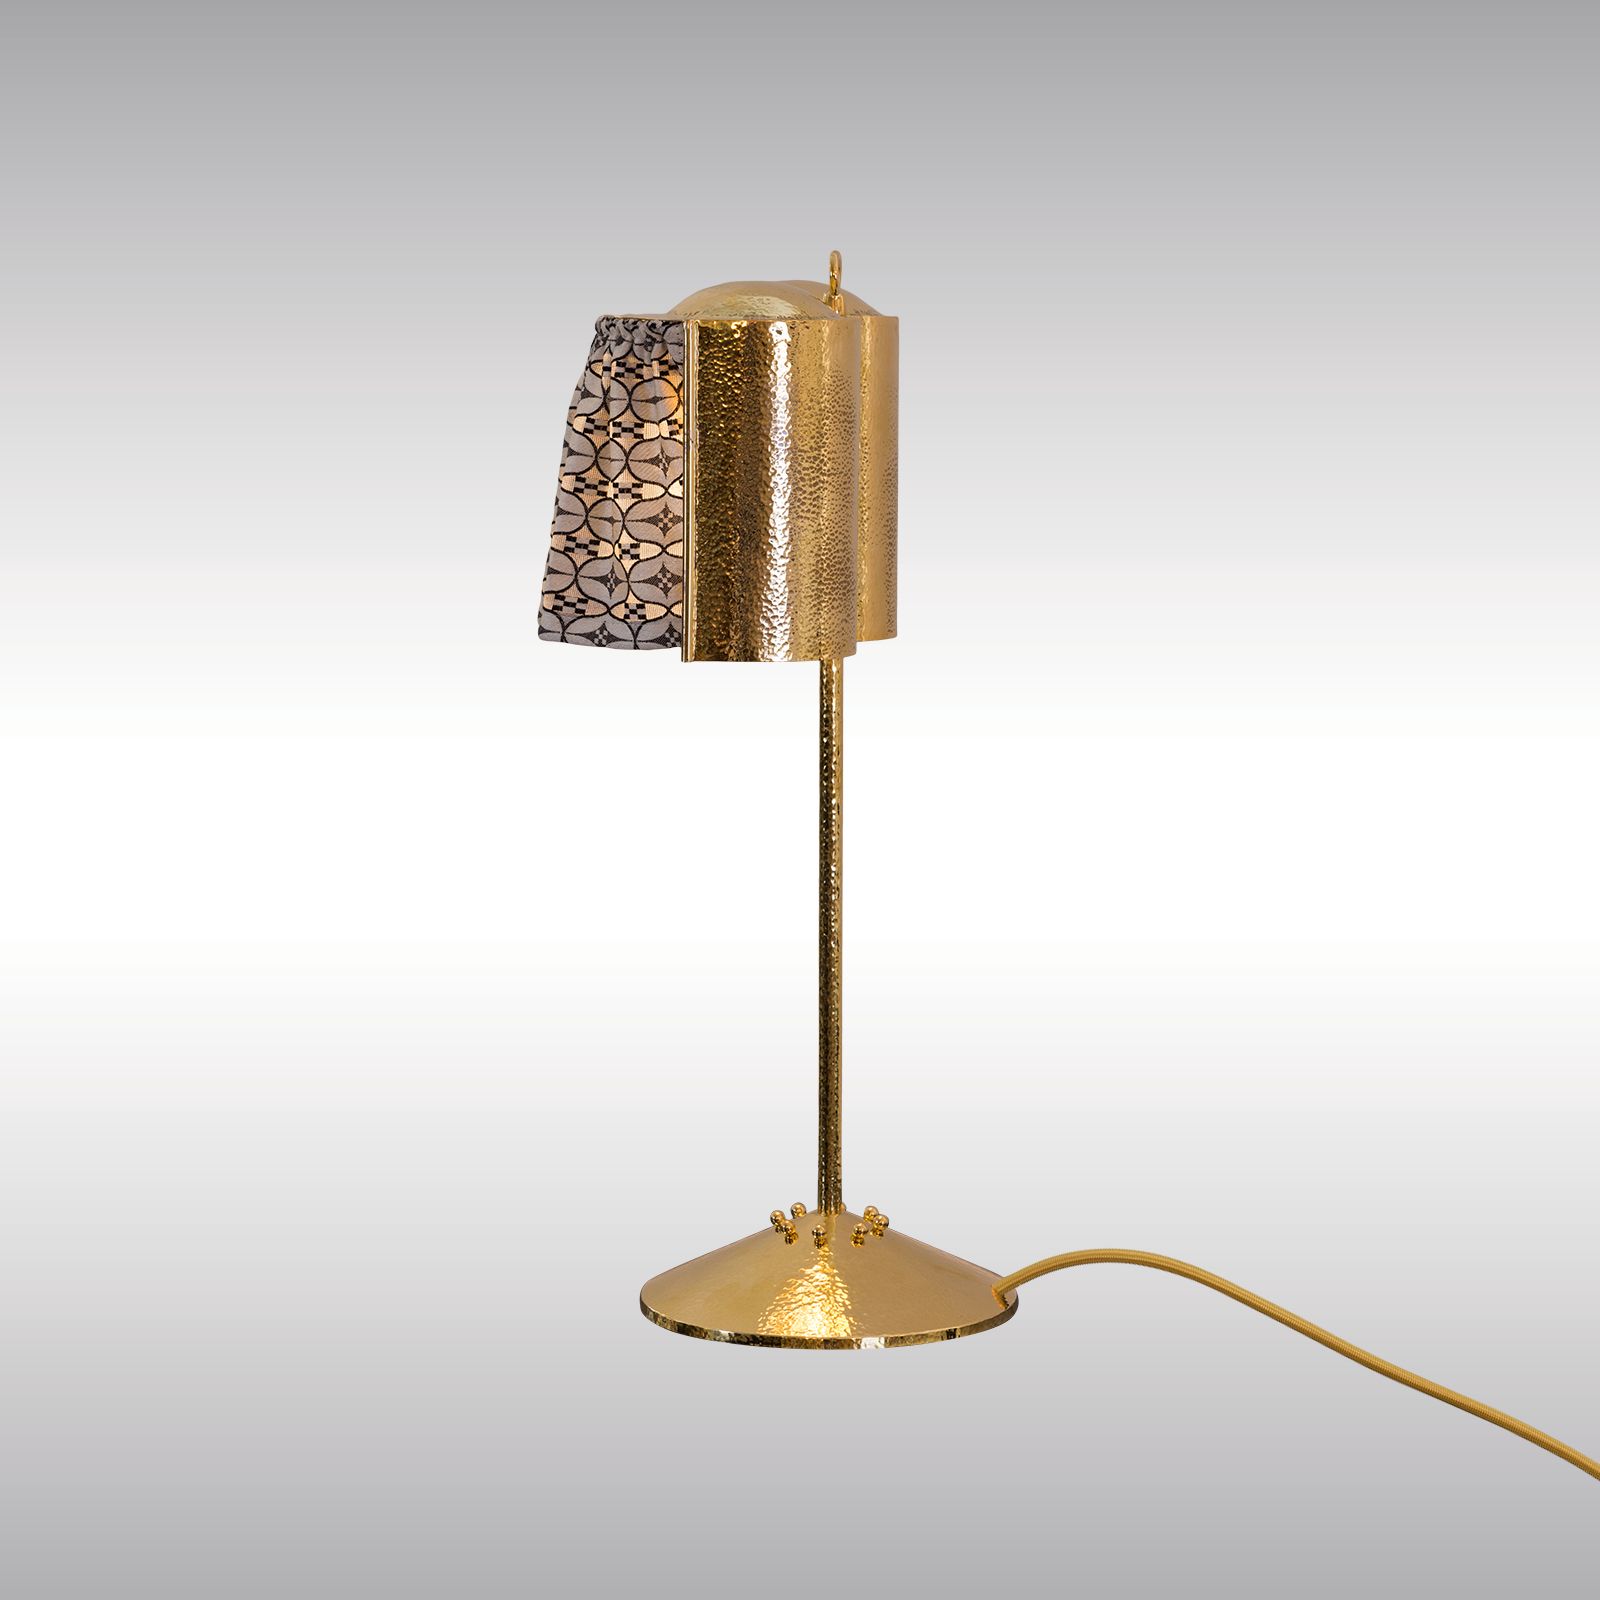 WOKA LAMPS VIENNA - OrderNr.: 22001|Josef Hoffmann and Wiener Werkstaette Desk Lamp - candle-holder - Design: Josef Hoffmann